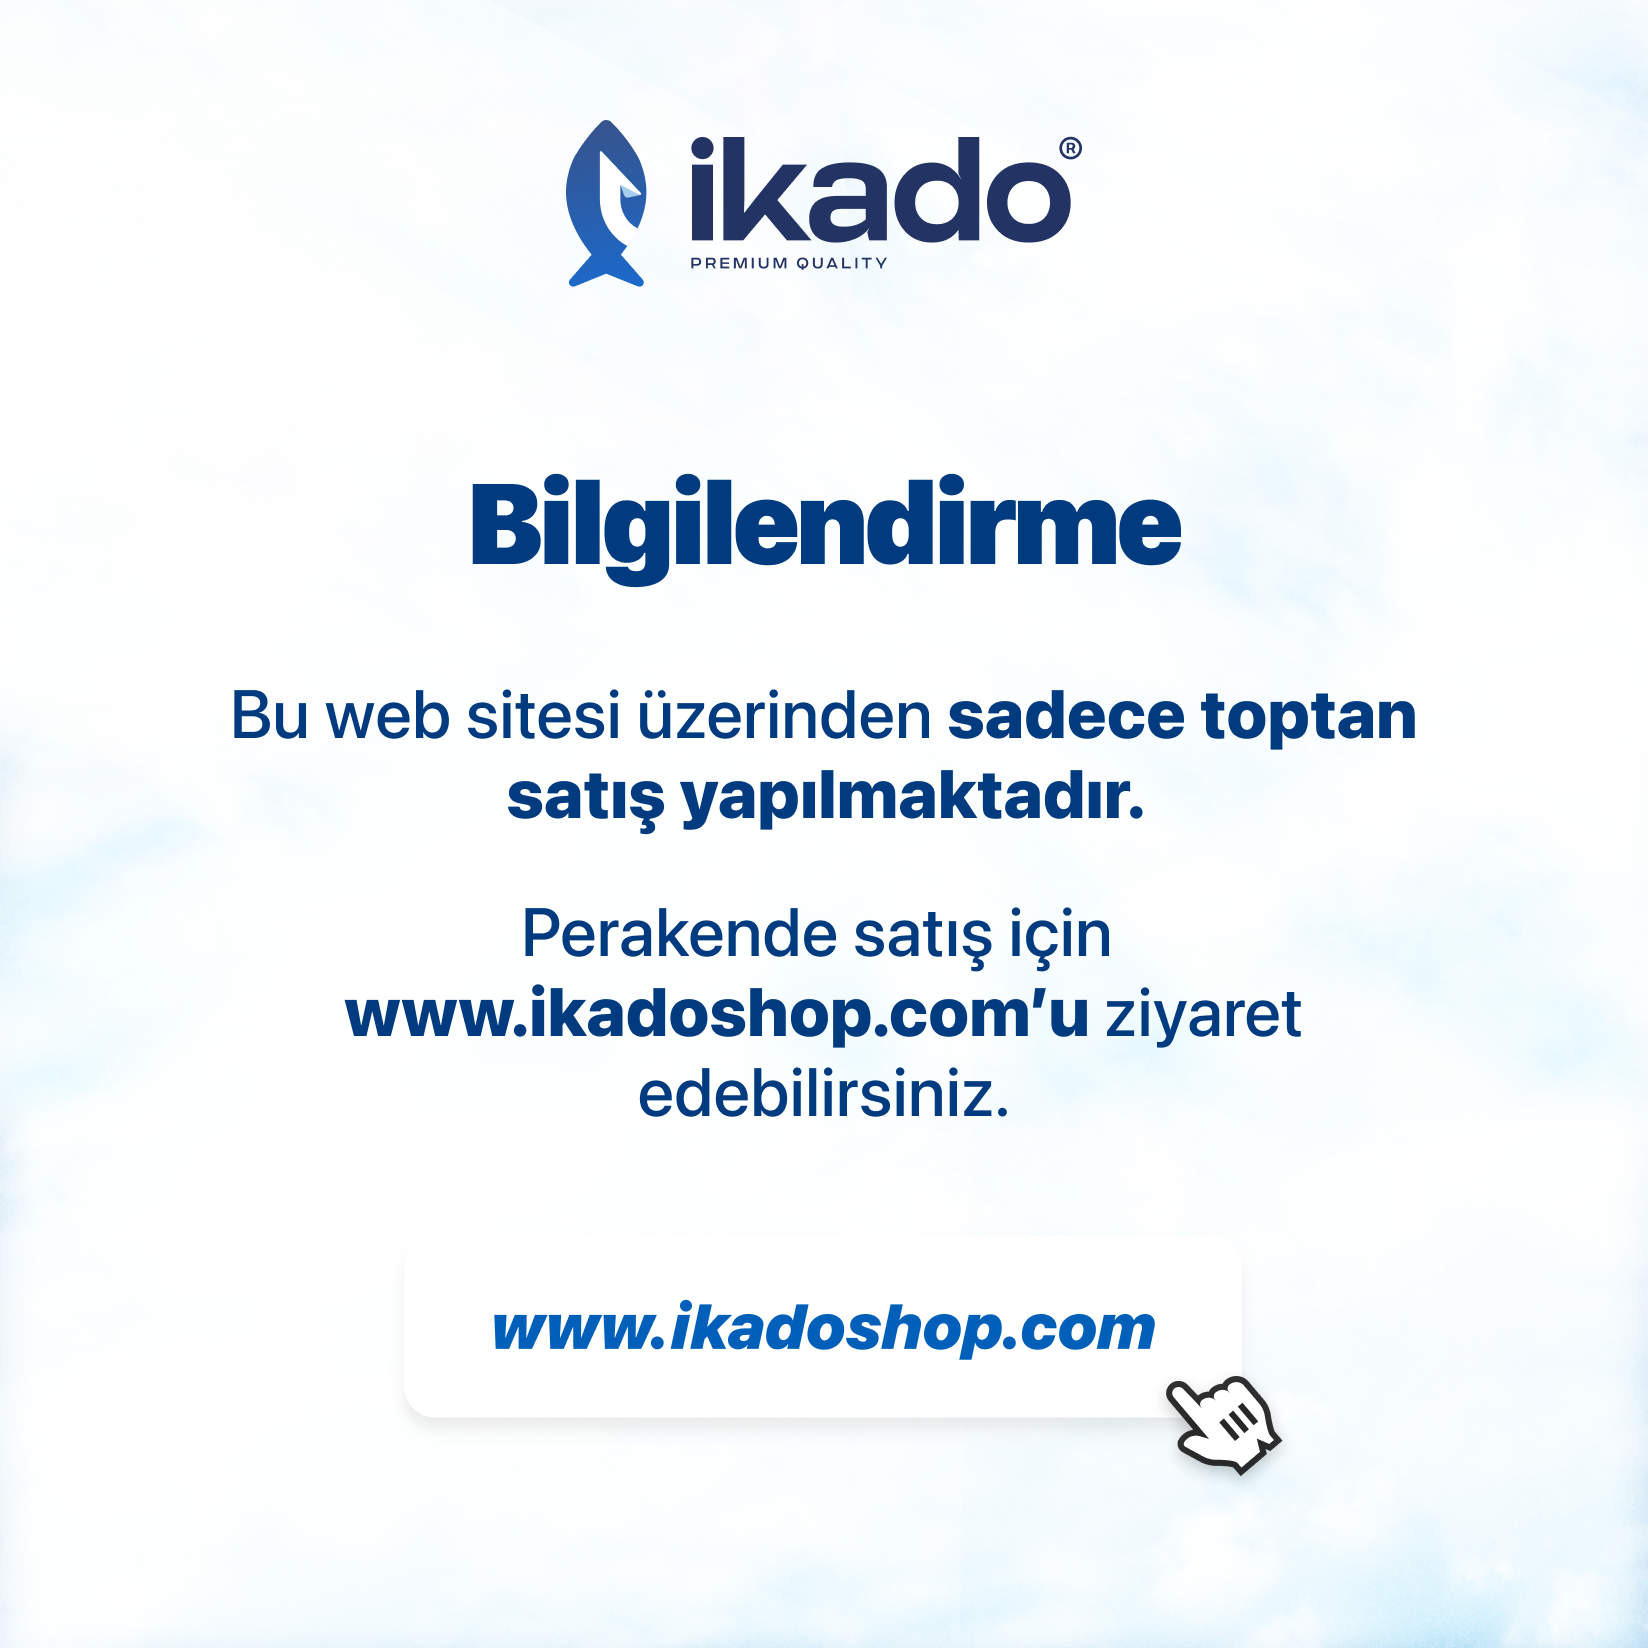 ikadoshop.com